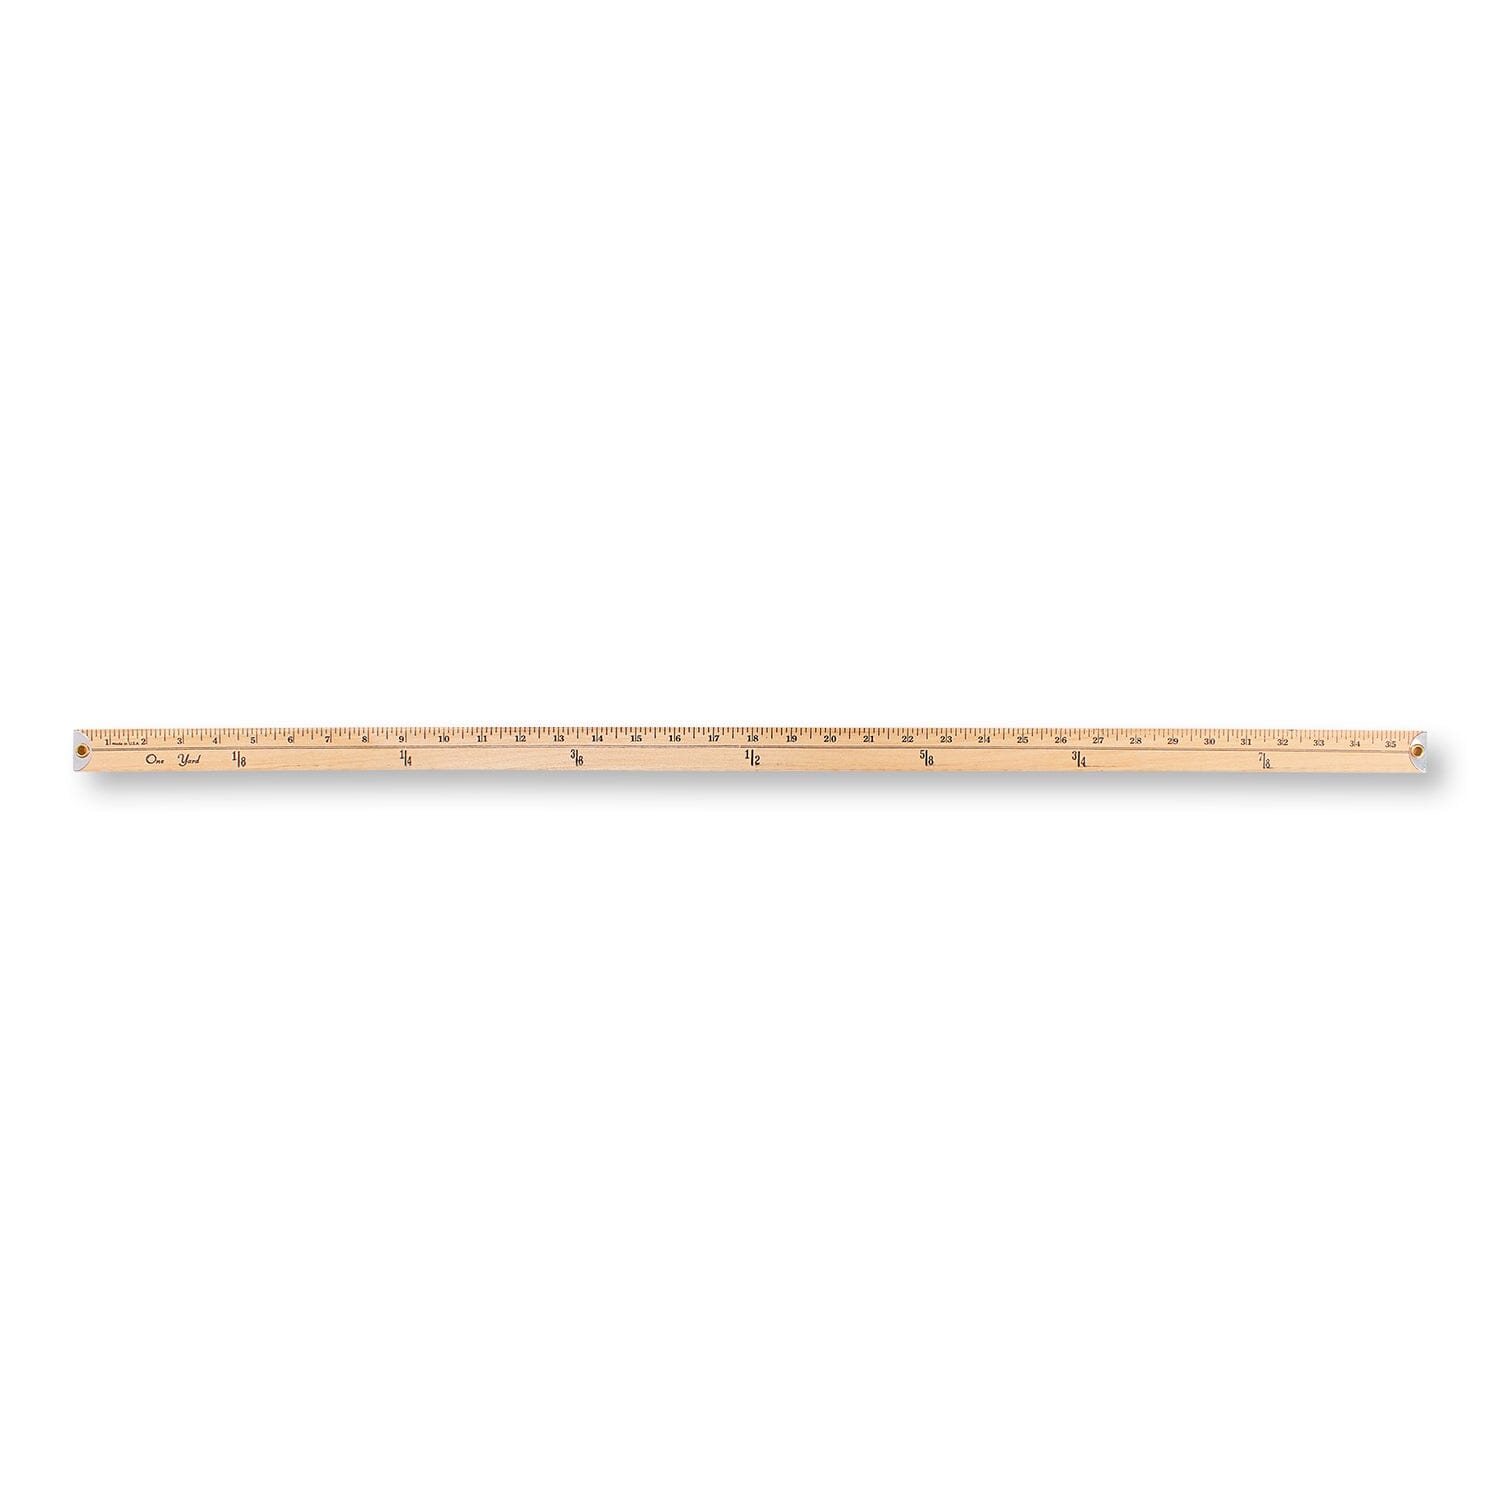 wood tailor ruler measuring tool wood